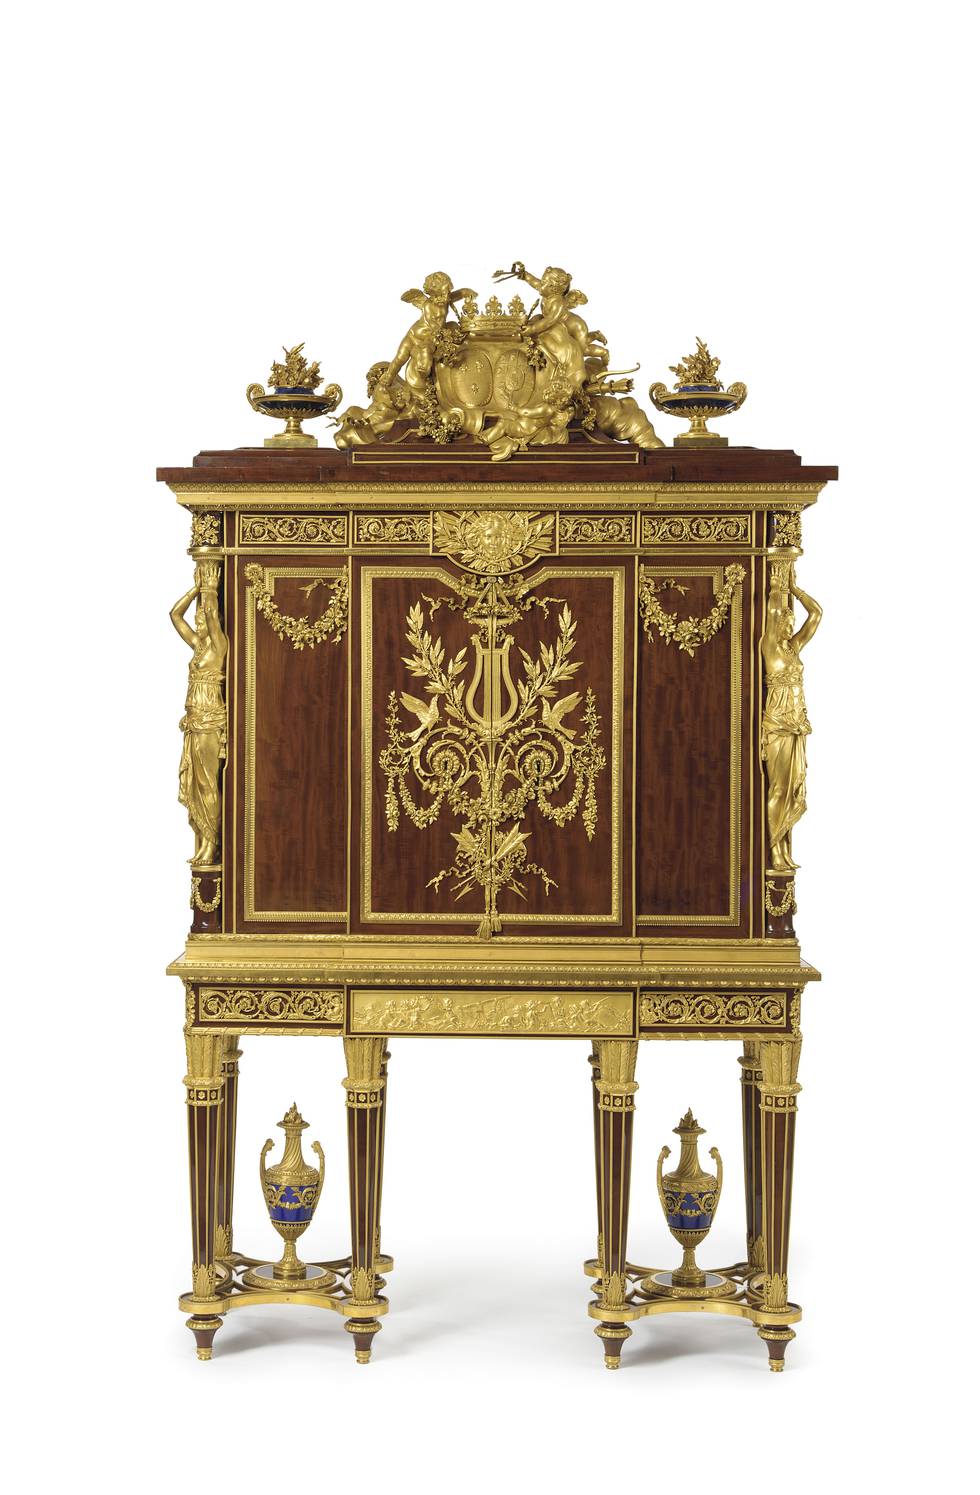 A mahogany-veneered jewel cabinet